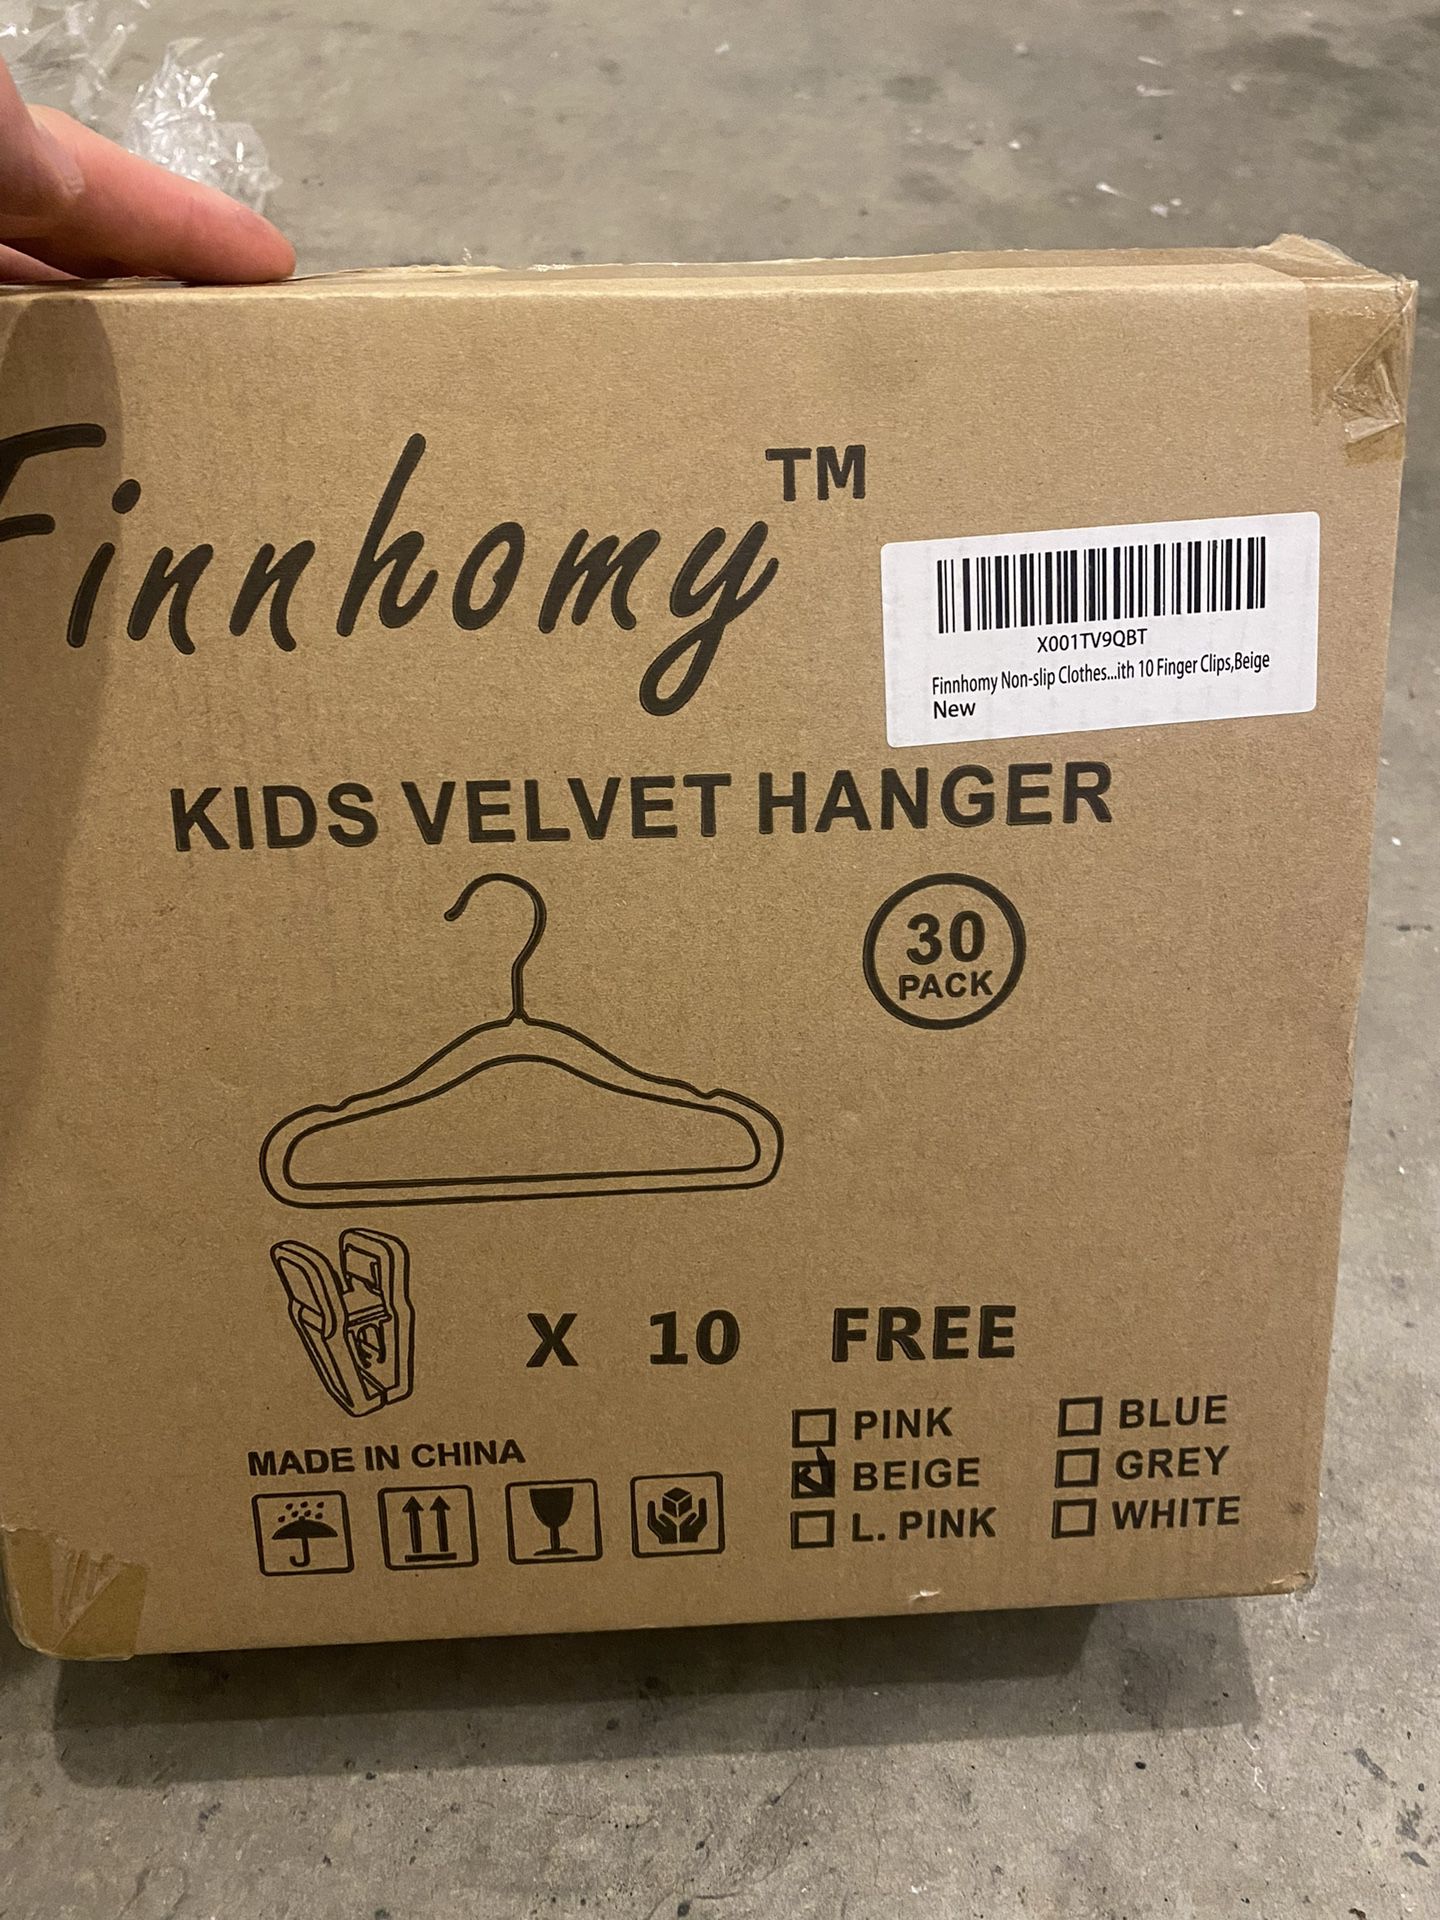  Finnhomy Non-Slip Clothes Hanger for Baby and Kids 30-Pack  Velvet Hangers with 10 Finger Clips,Beige : Home & Kitchen